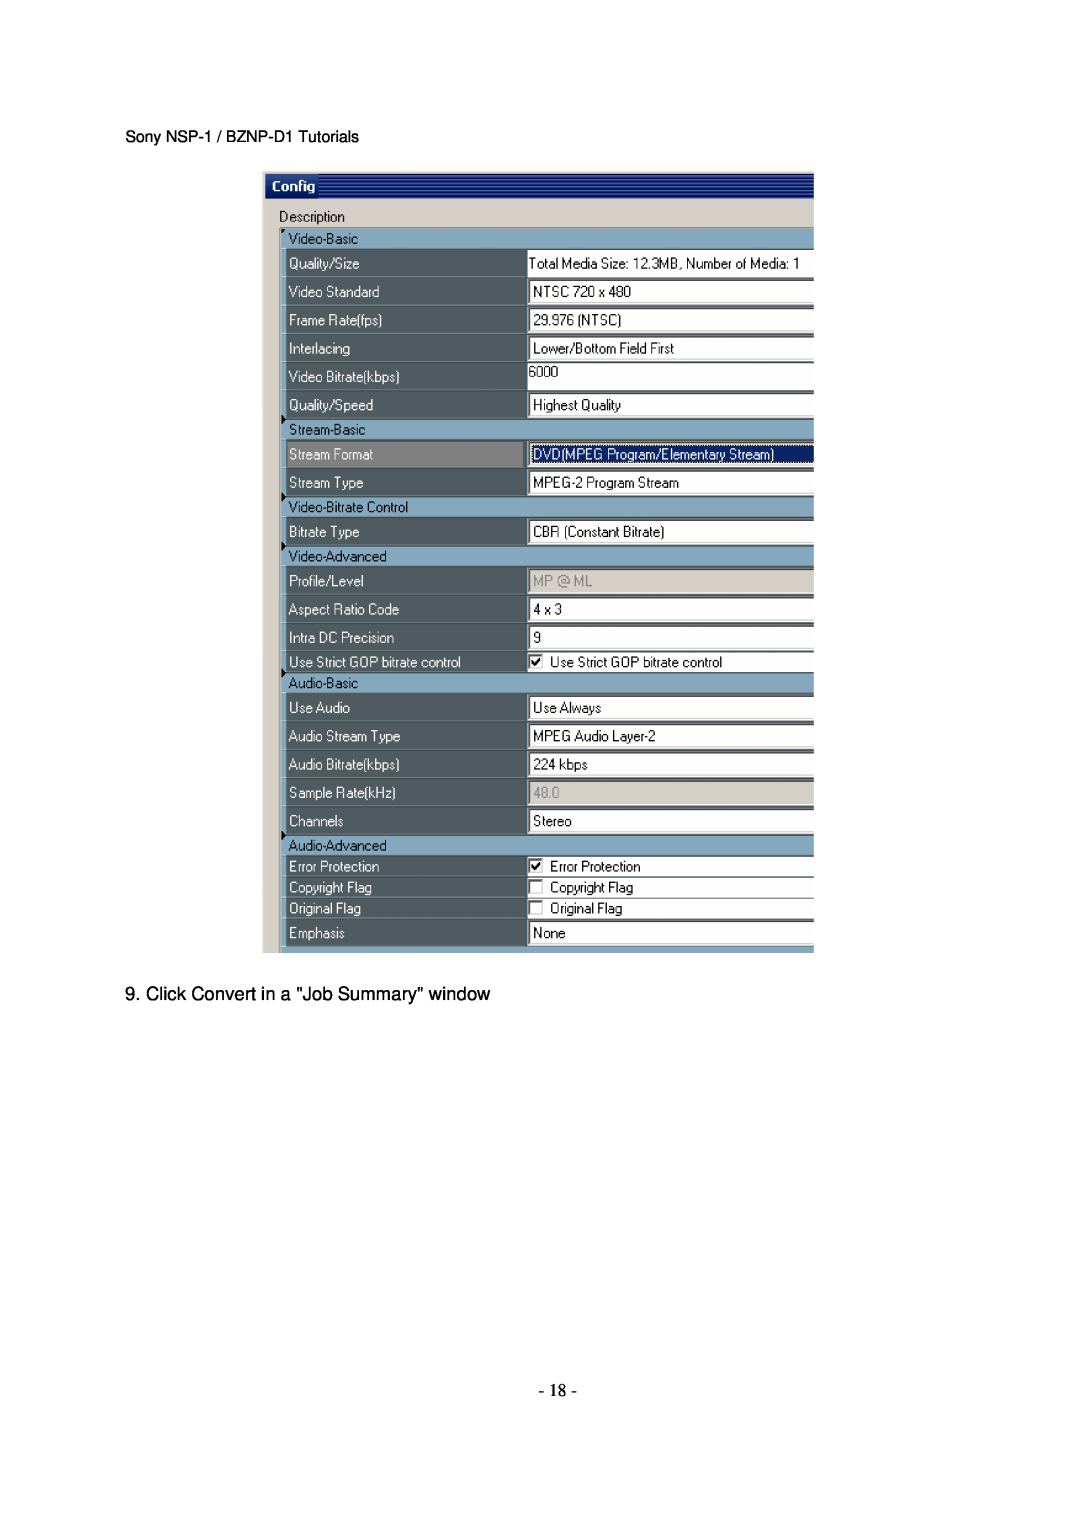 Sony manual Click Convert in a Job Summary window, Sony NSP-1 / BZNP-D1Tutorials 